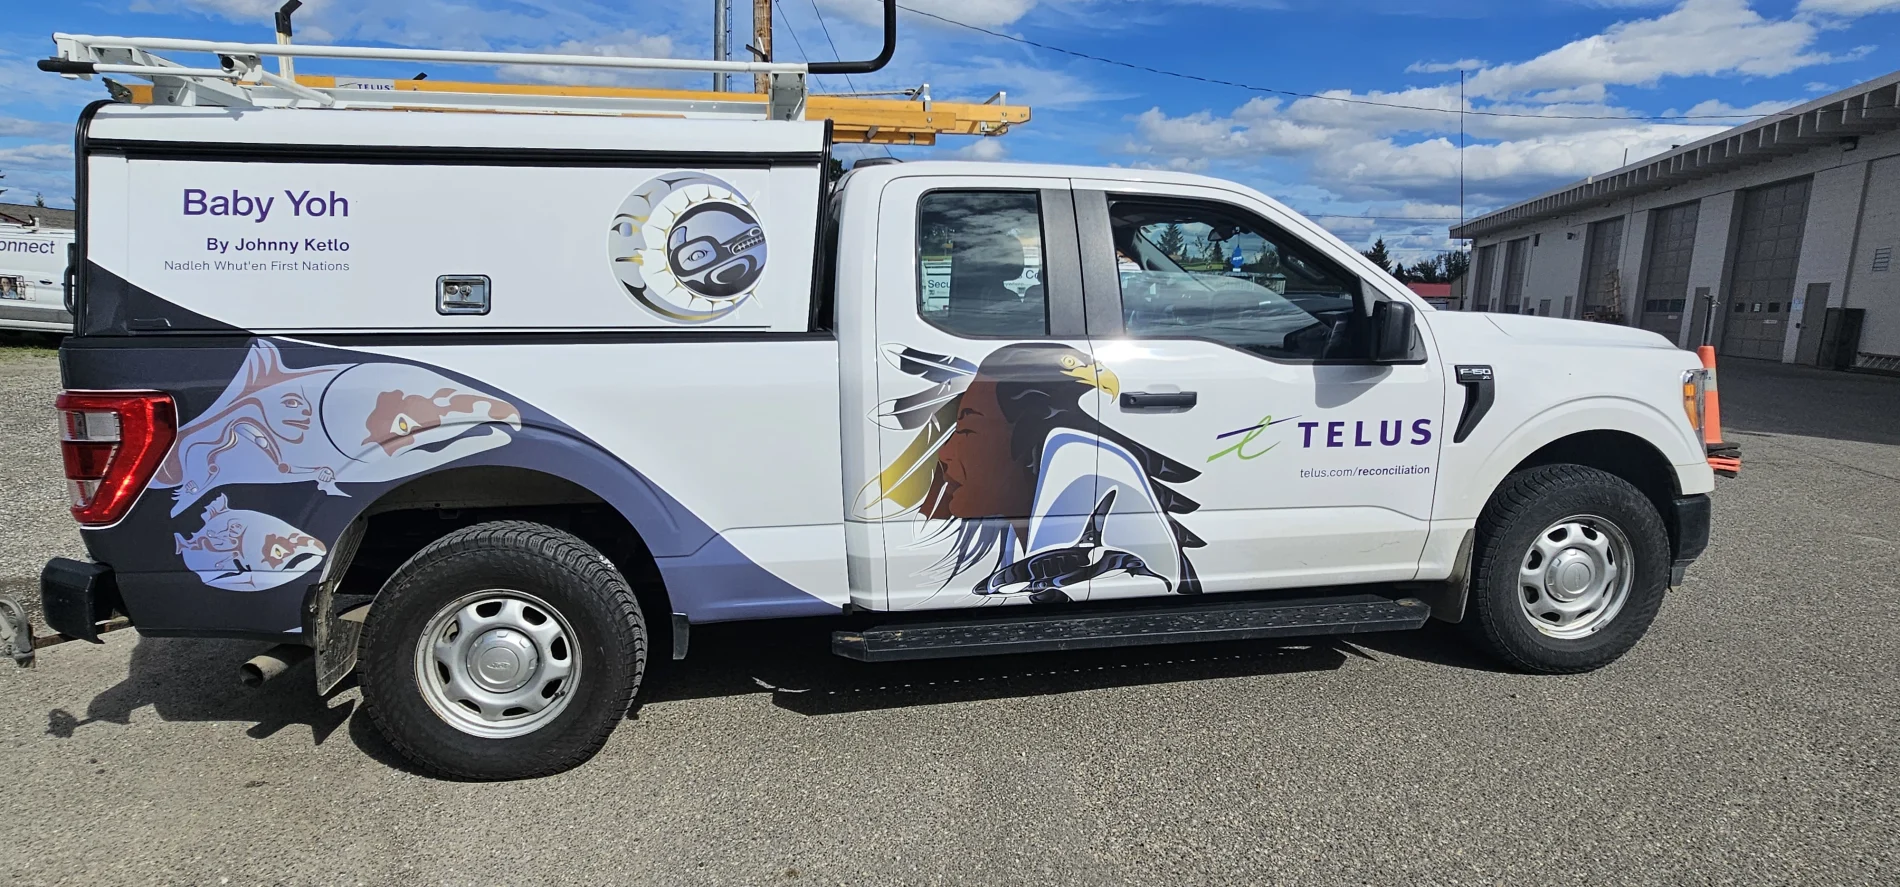 TELUS fleet vehicle featuring artwork by Johnny Ketlo III.